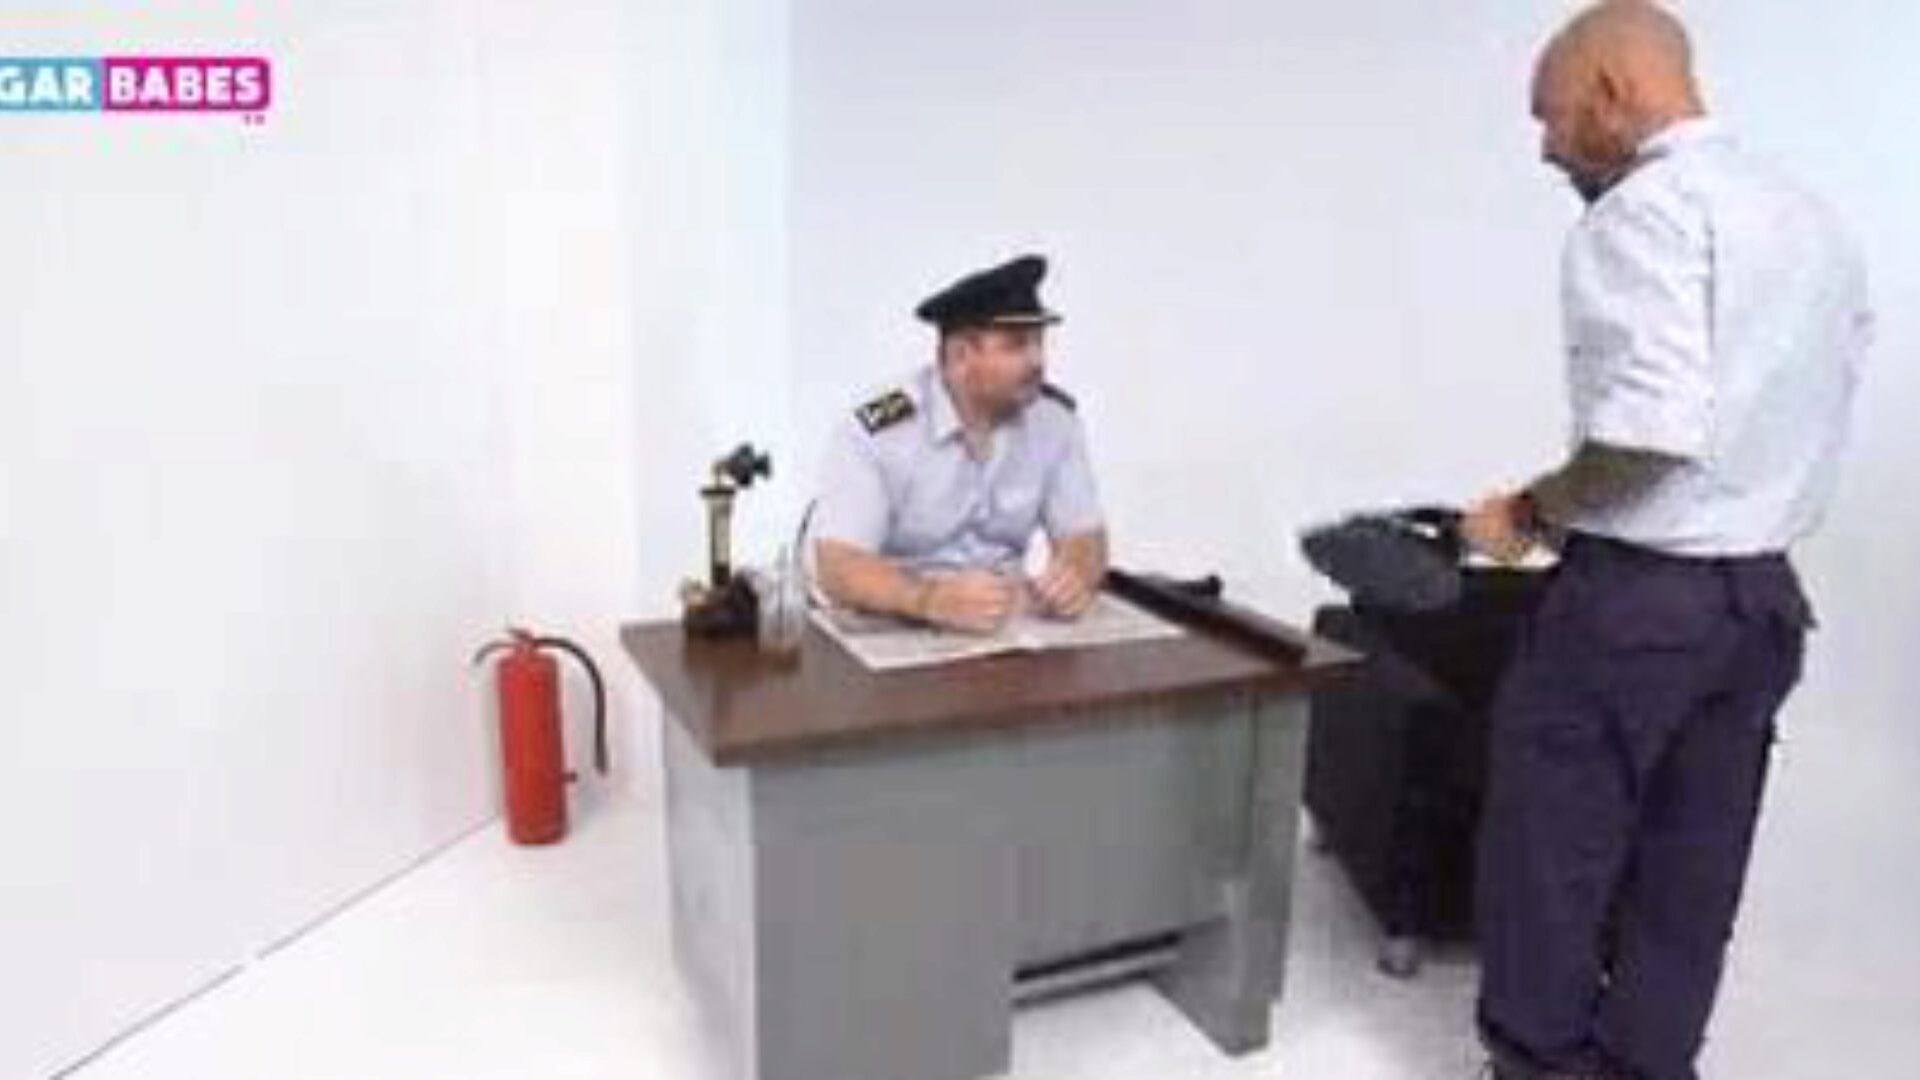 sugarbabestv: ofițeri de poliție greci dracu 'nebun